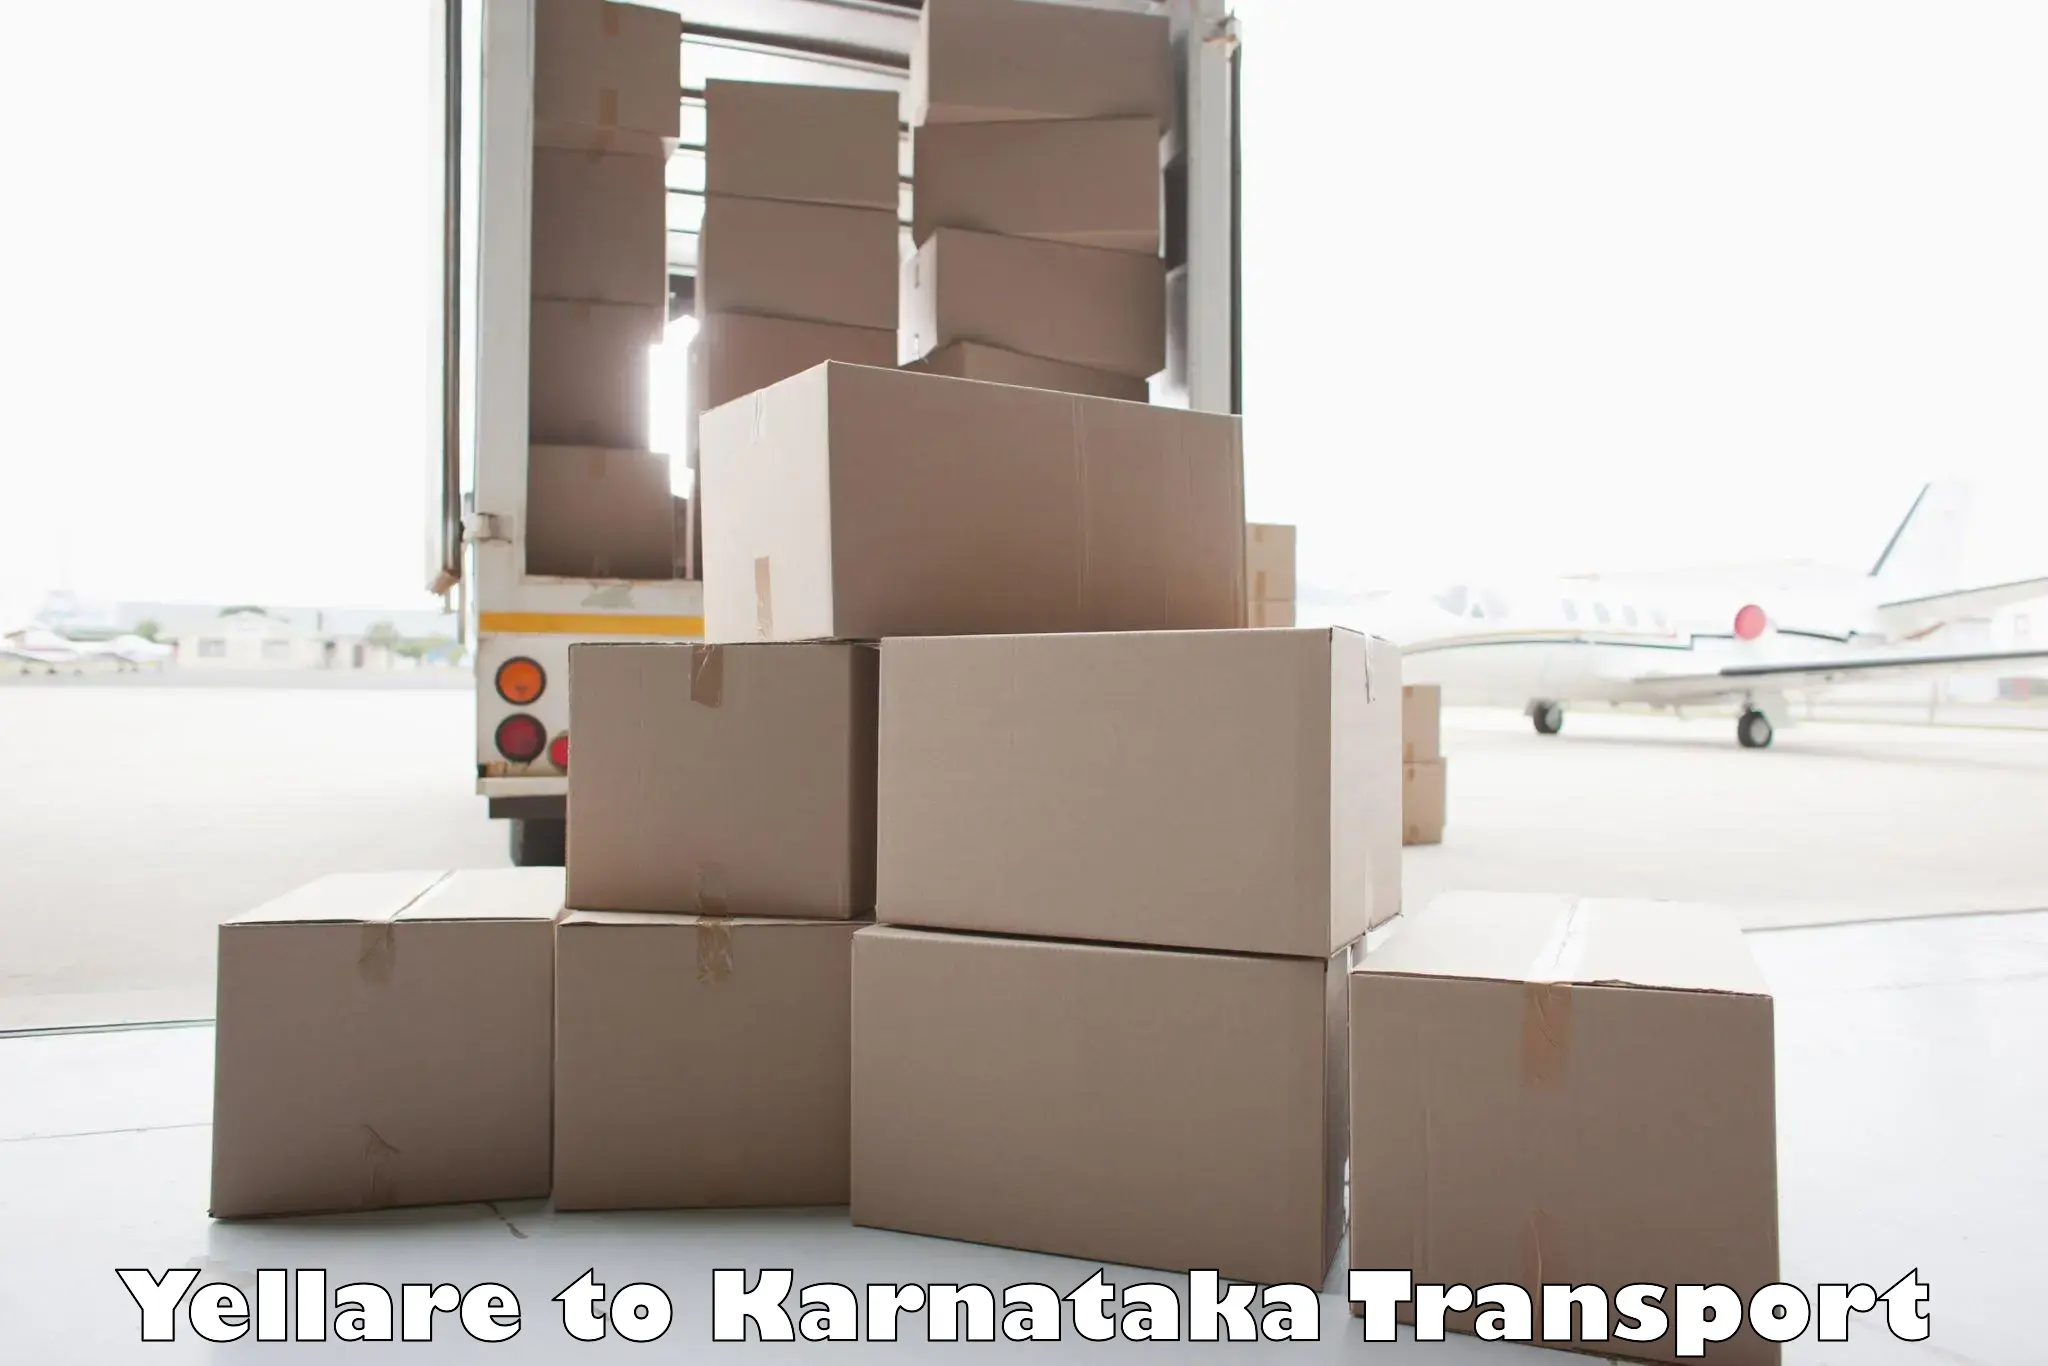 Online transport service Yellare to Karnataka